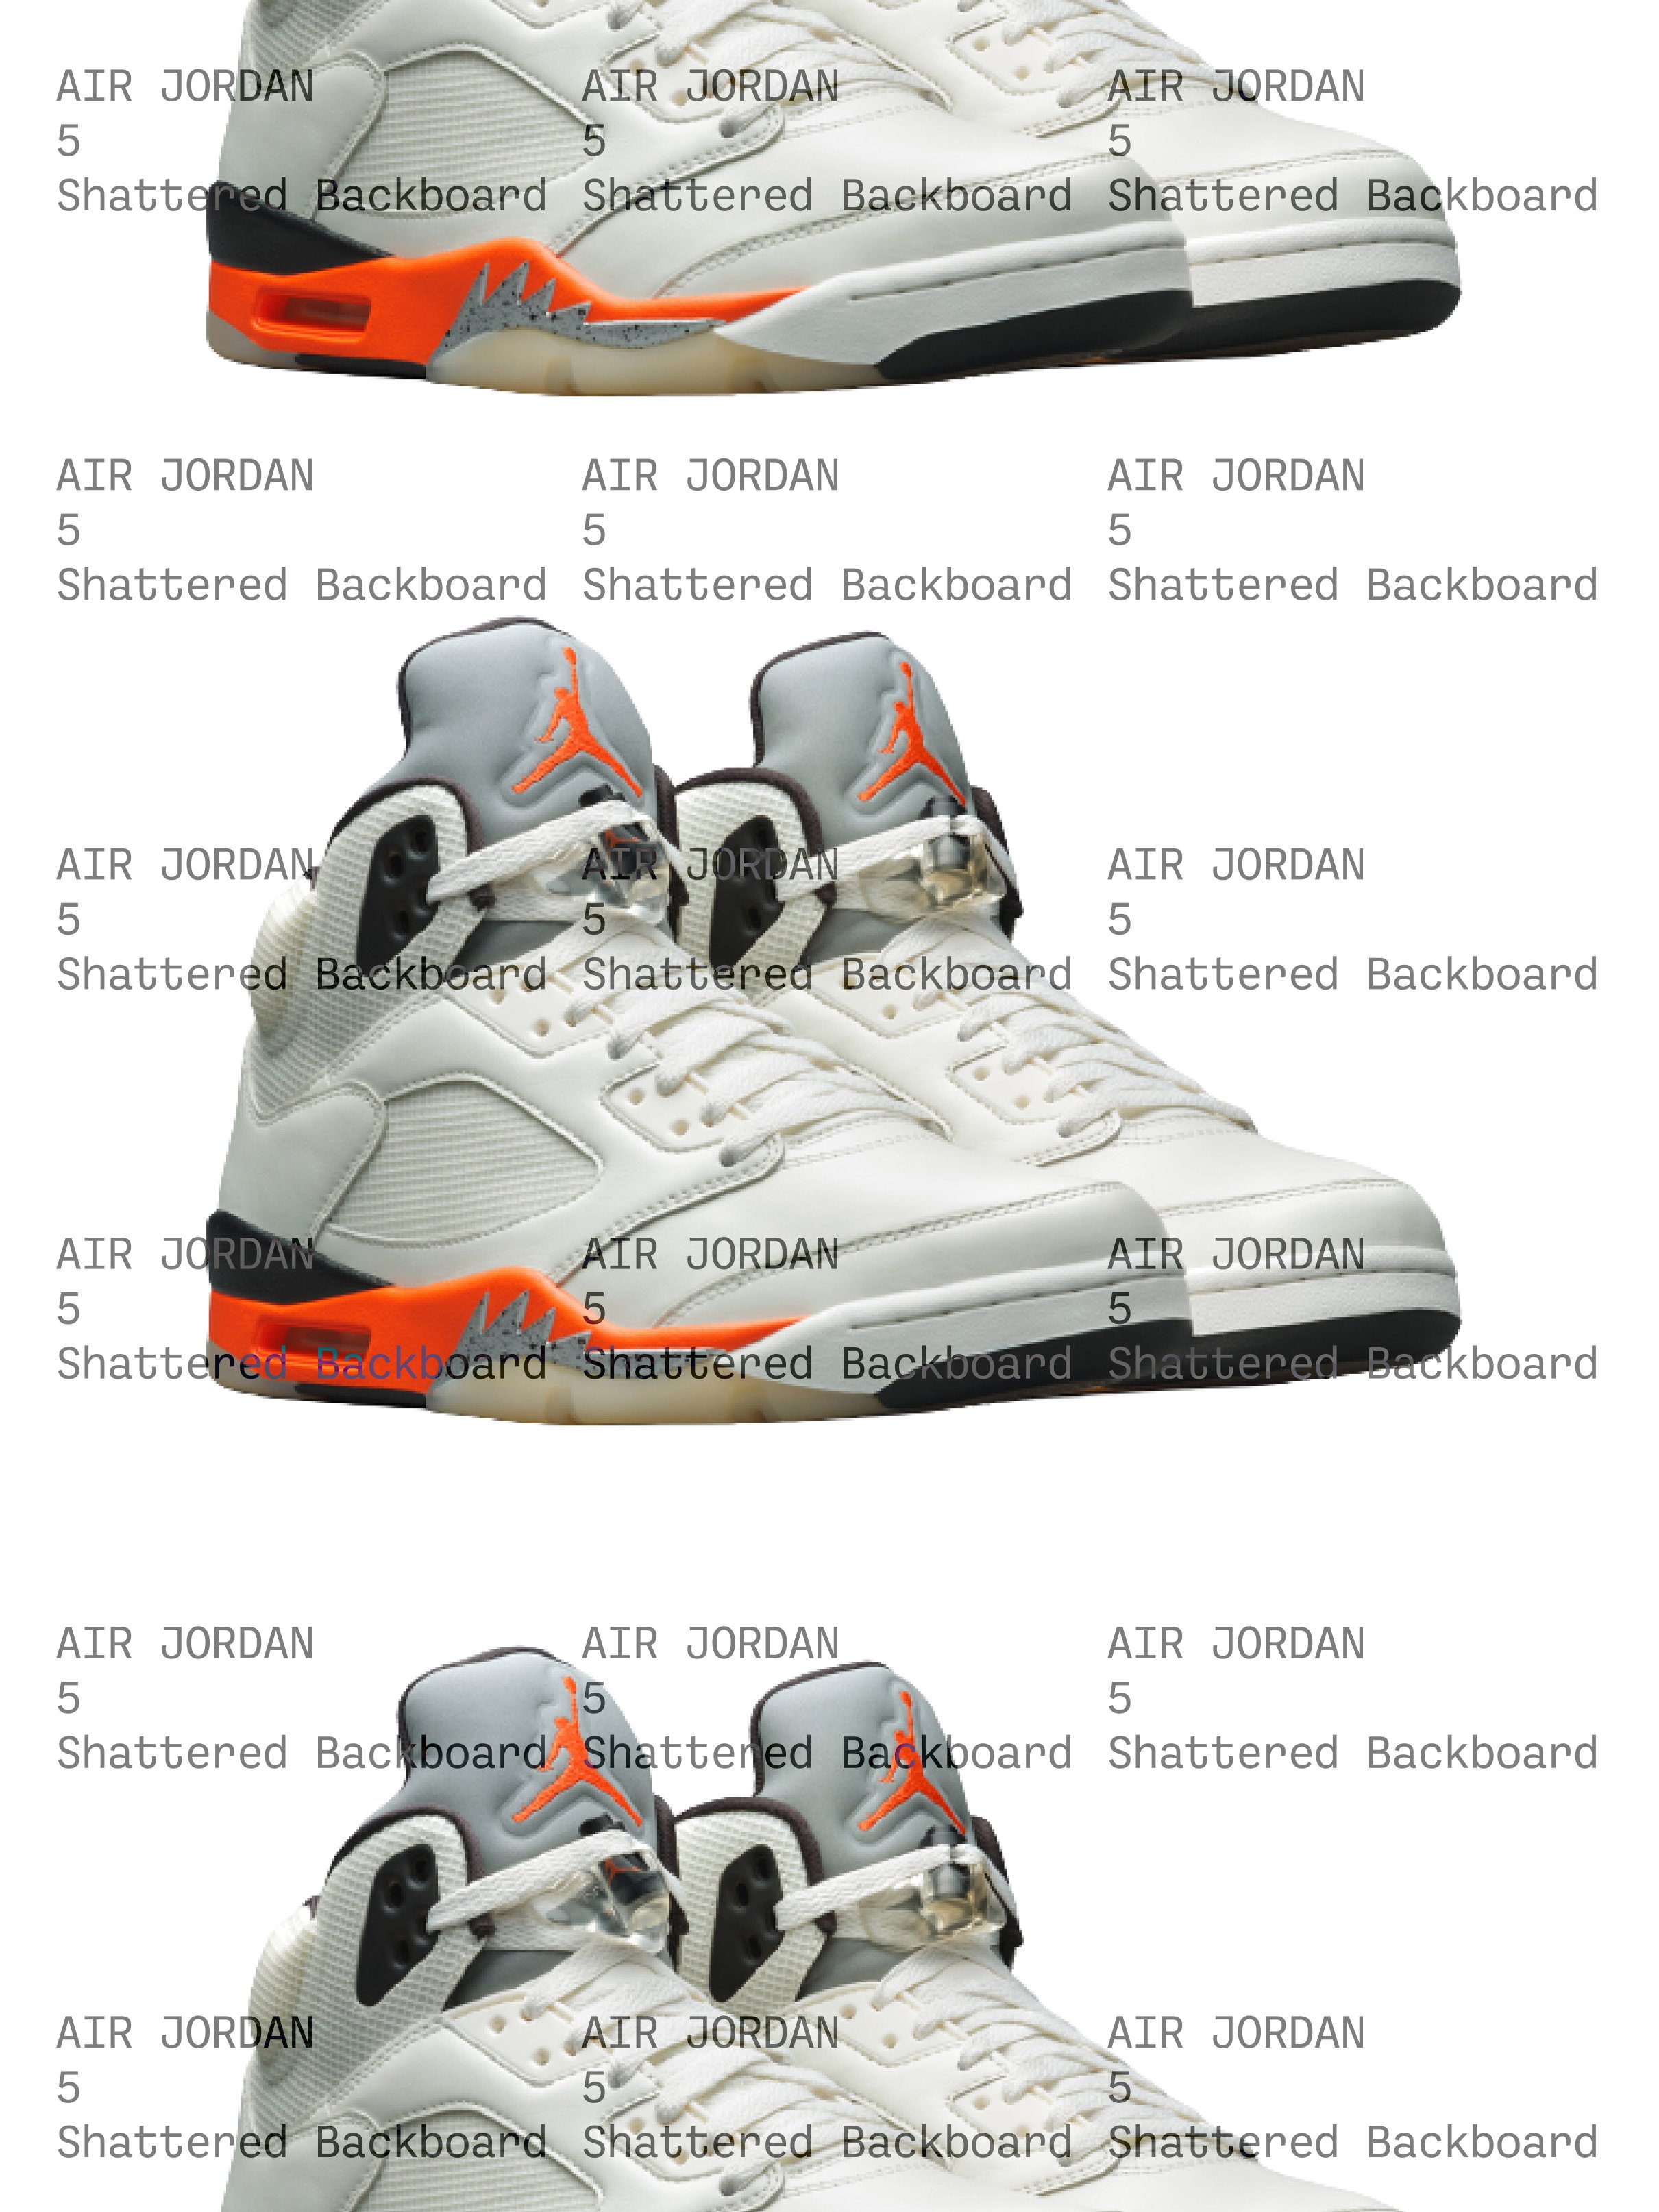 Michael Jordan's Shattered Backboard Comes to the Air Jordan 5 | GOAT